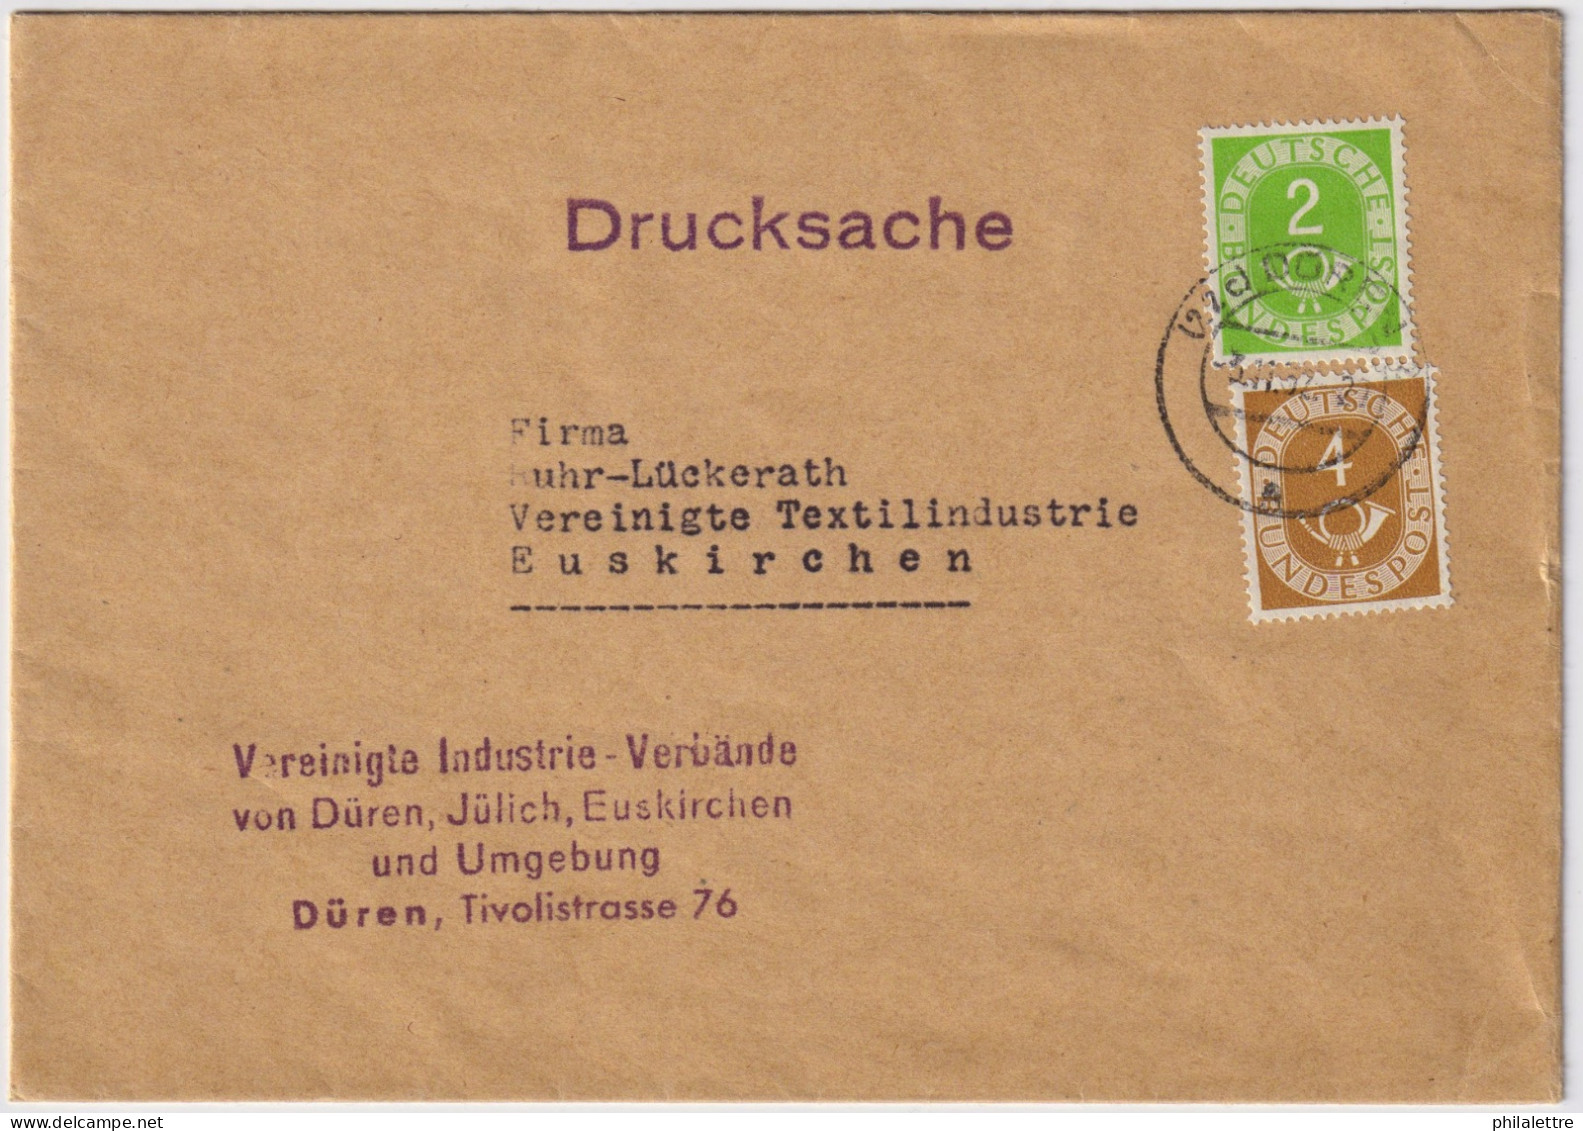 ALLEMAGNE / GERMANY - 1953 - Mi.123 & Mi.124 2pf. & 4pf. On Printed Matters (Drucksache) Cover From Düren To Euskirchen - Brieven En Documenten